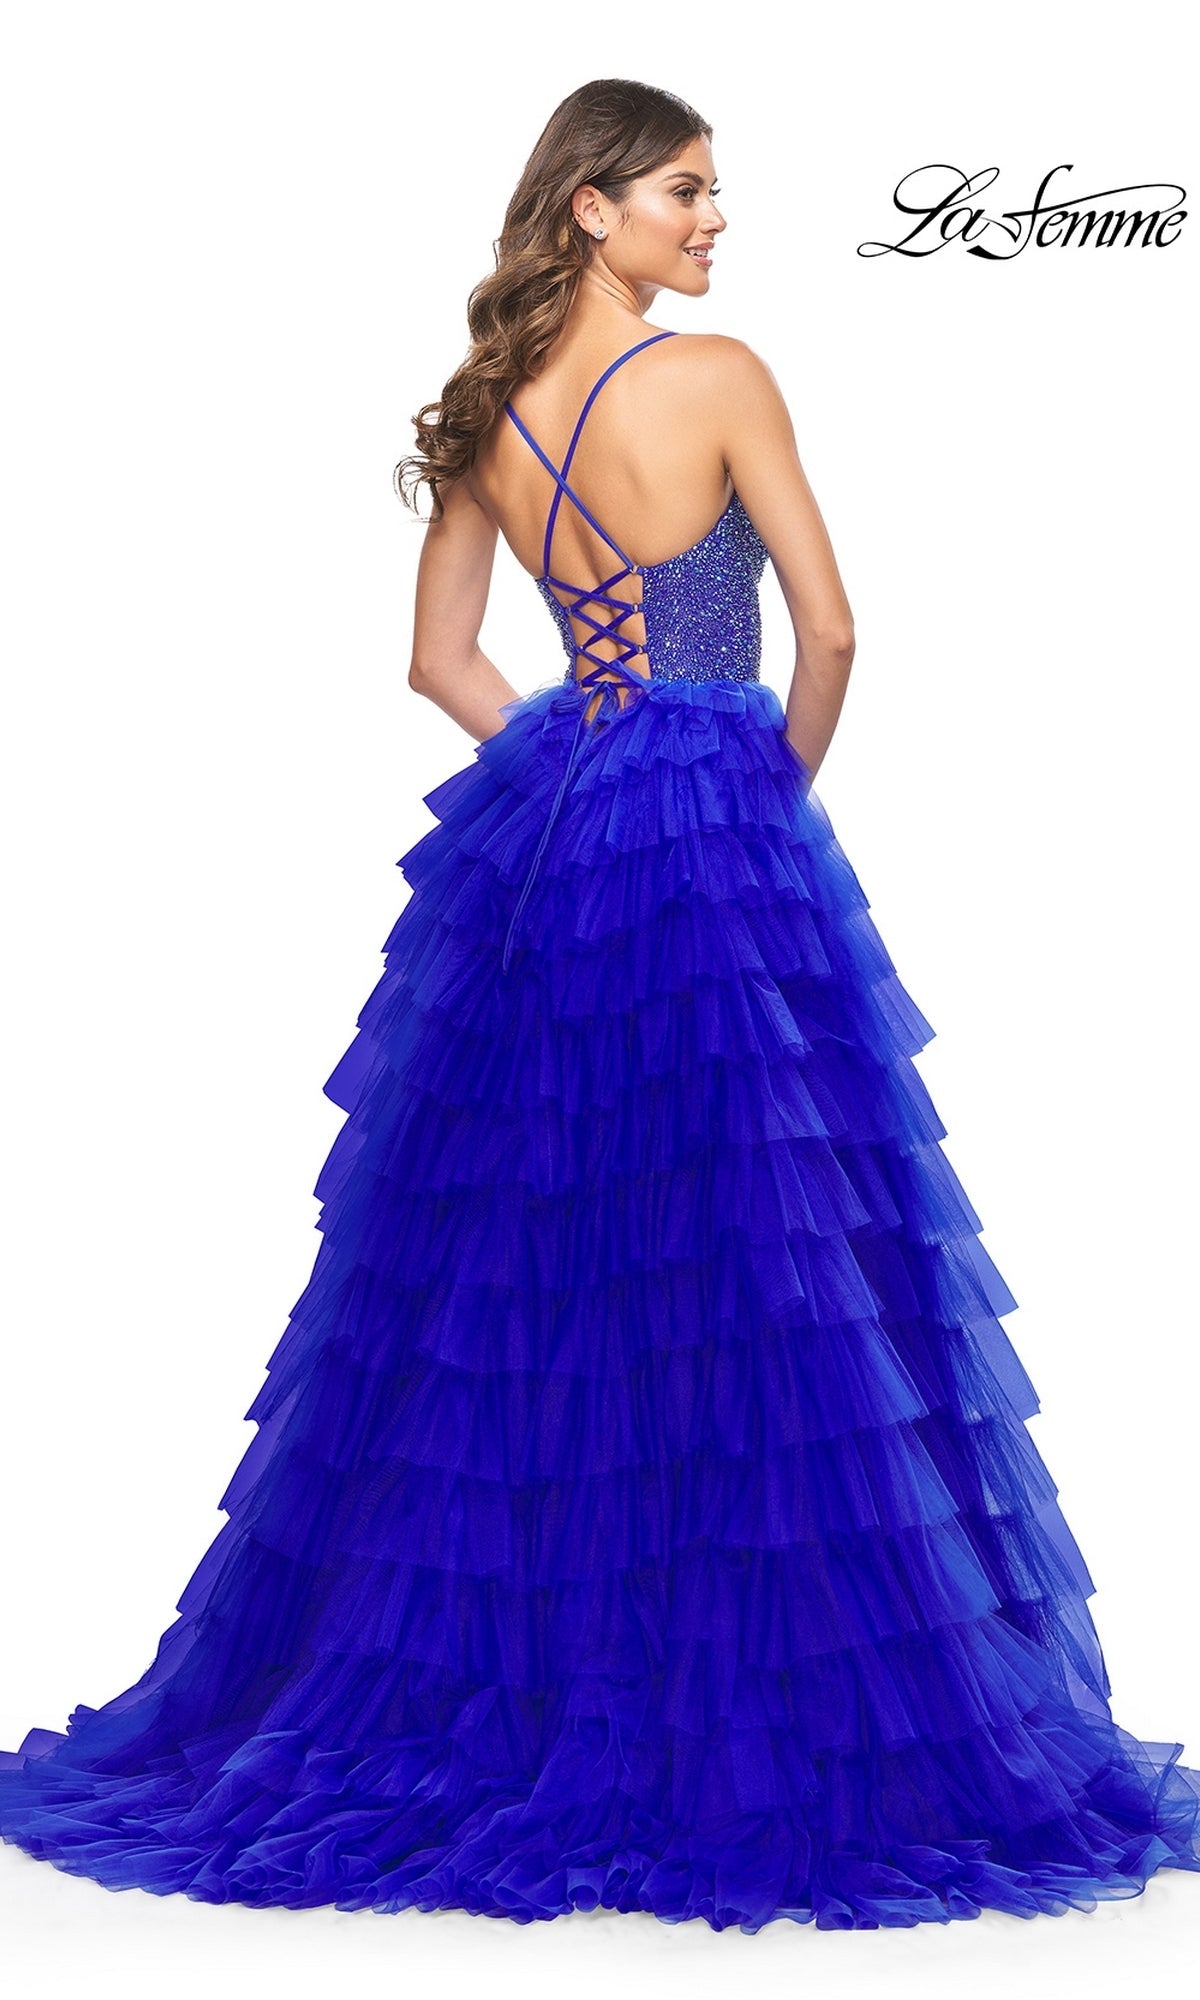  La Femme 32002 Formal Prom Dress